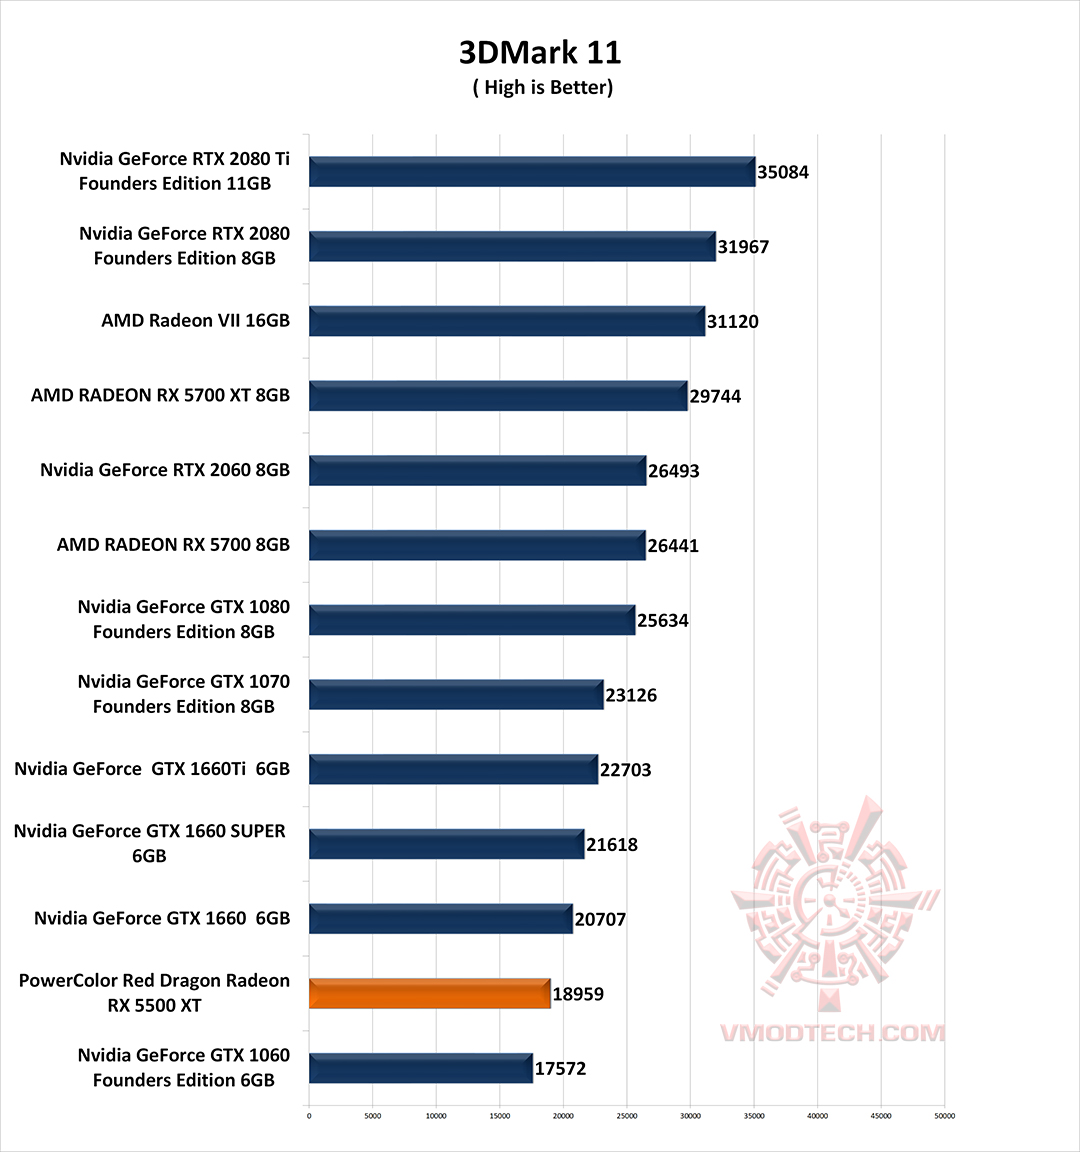 11 g PowerColor Red Dragon Radeon RX 5500 XT Review